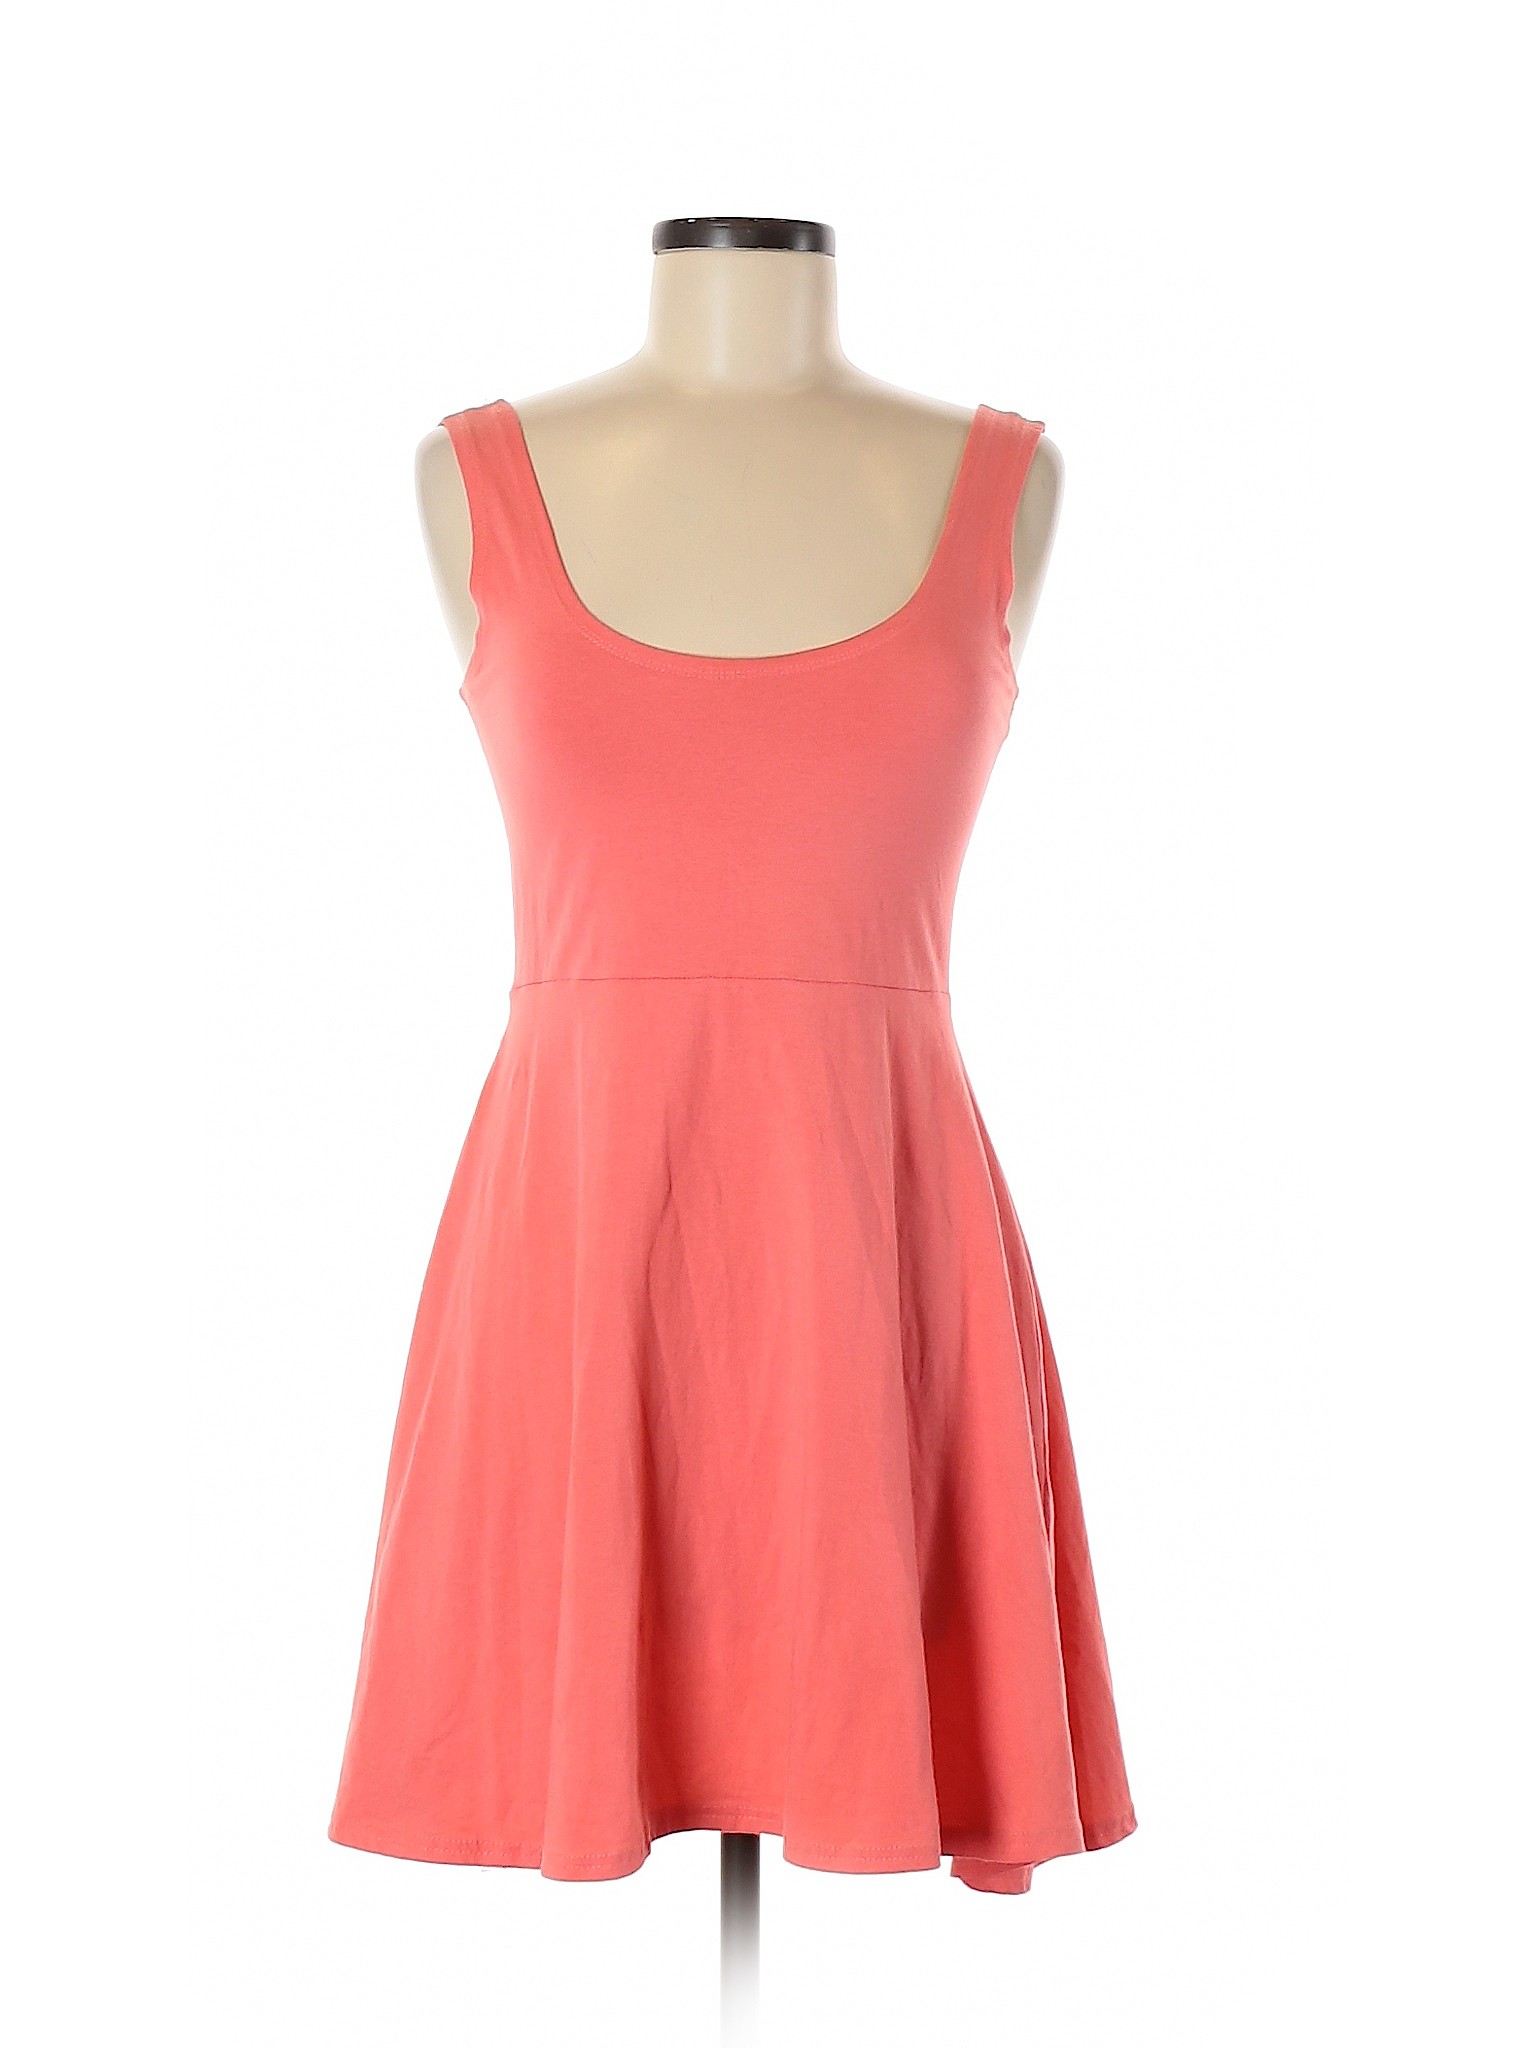 Charming Charlie Women Pink Casual Dress Med | eBay